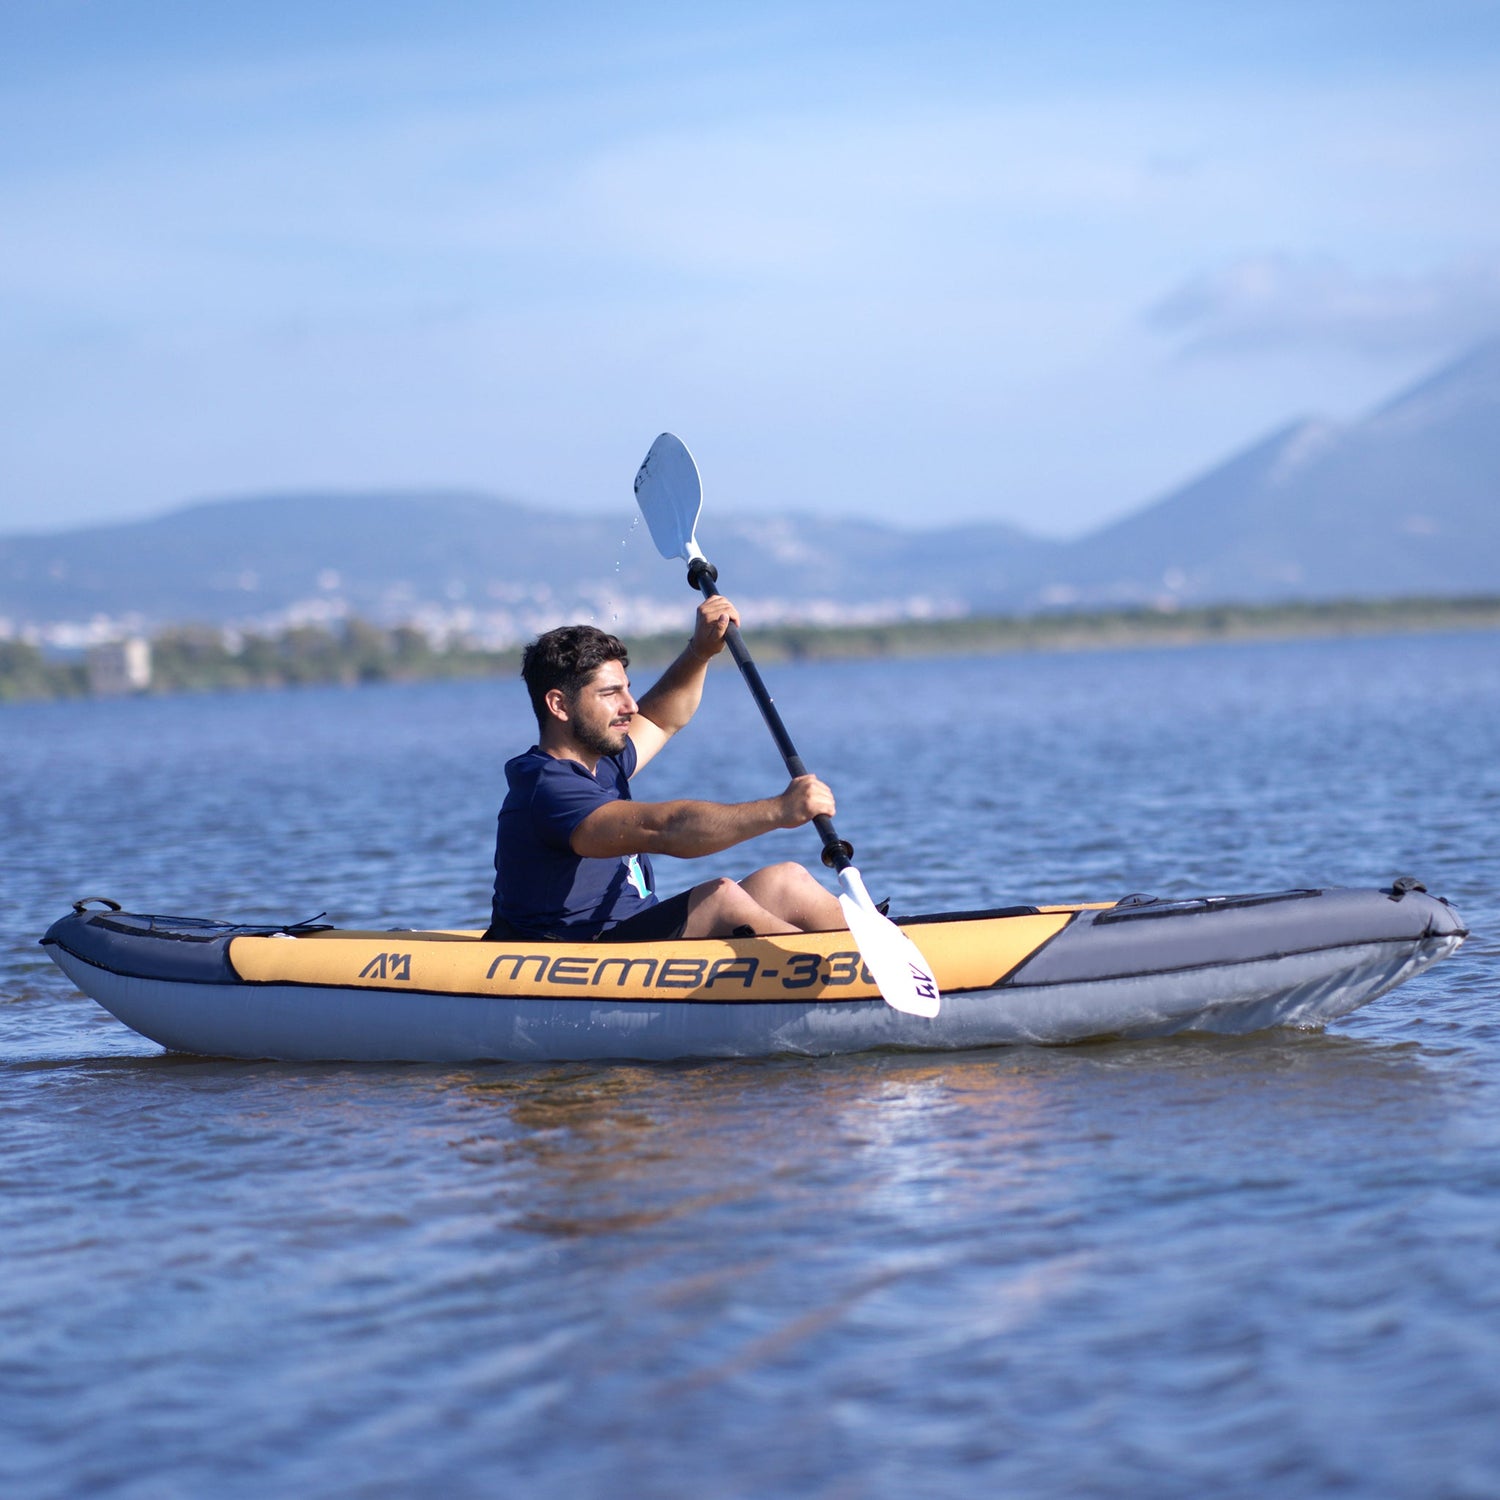 Affordable Kayak, Inexpensive Kayak, Cheap Kayak, Light Kayak, Thin Kayak, Boat, 6 seater, 2 seater, 1 seater